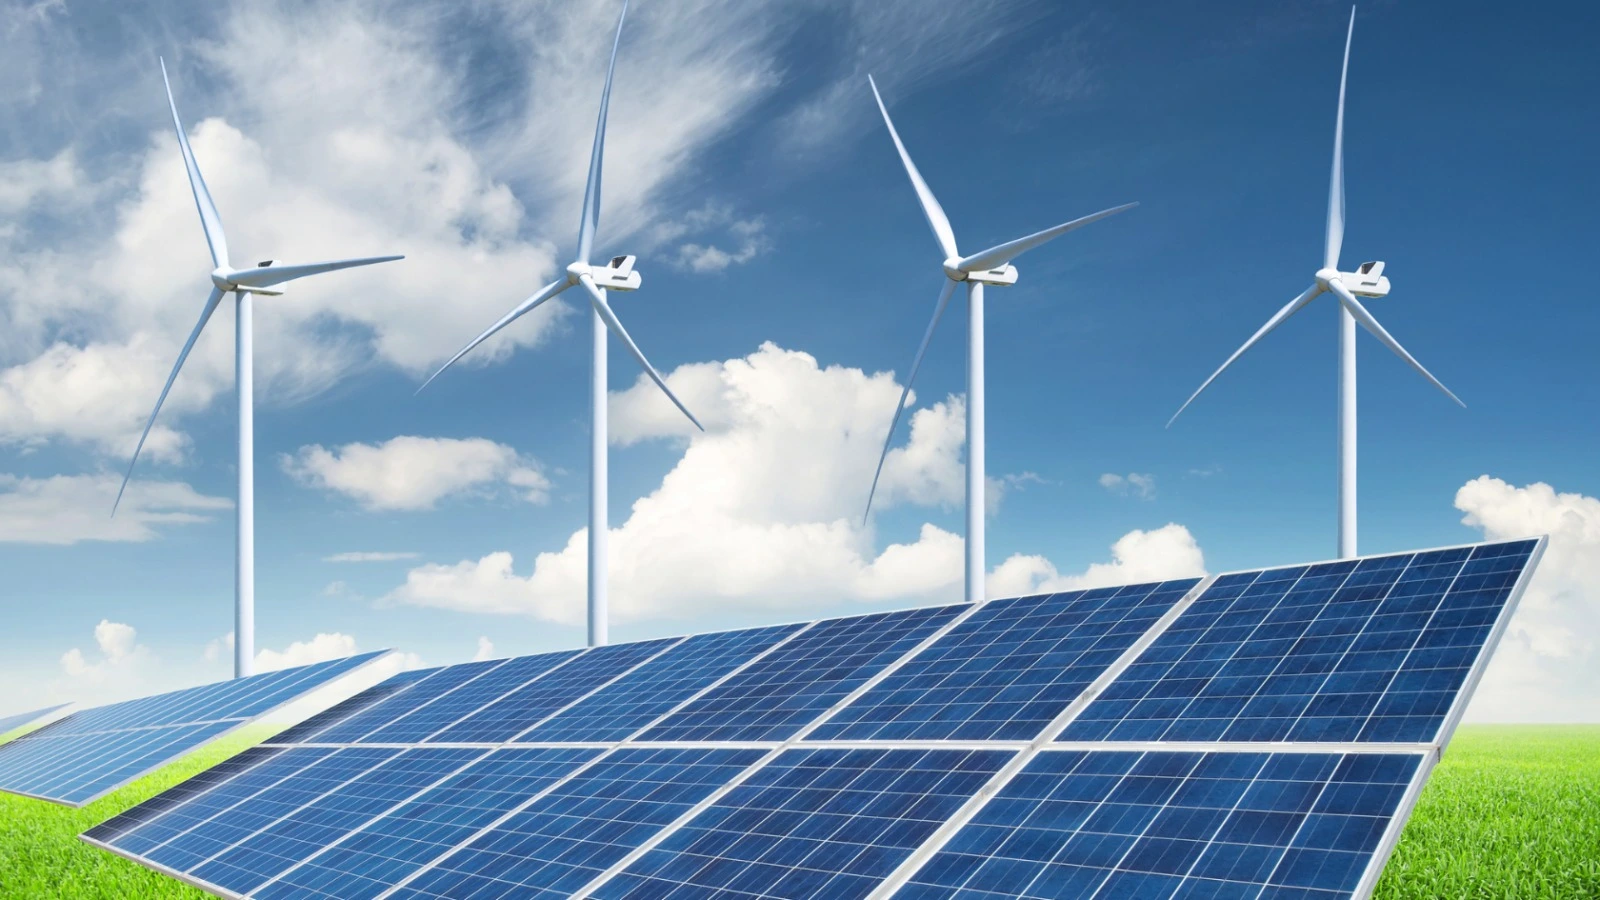 SJVN Green Seeks Developers for 1.5 GW Wind-Solar Hybrid Project in India